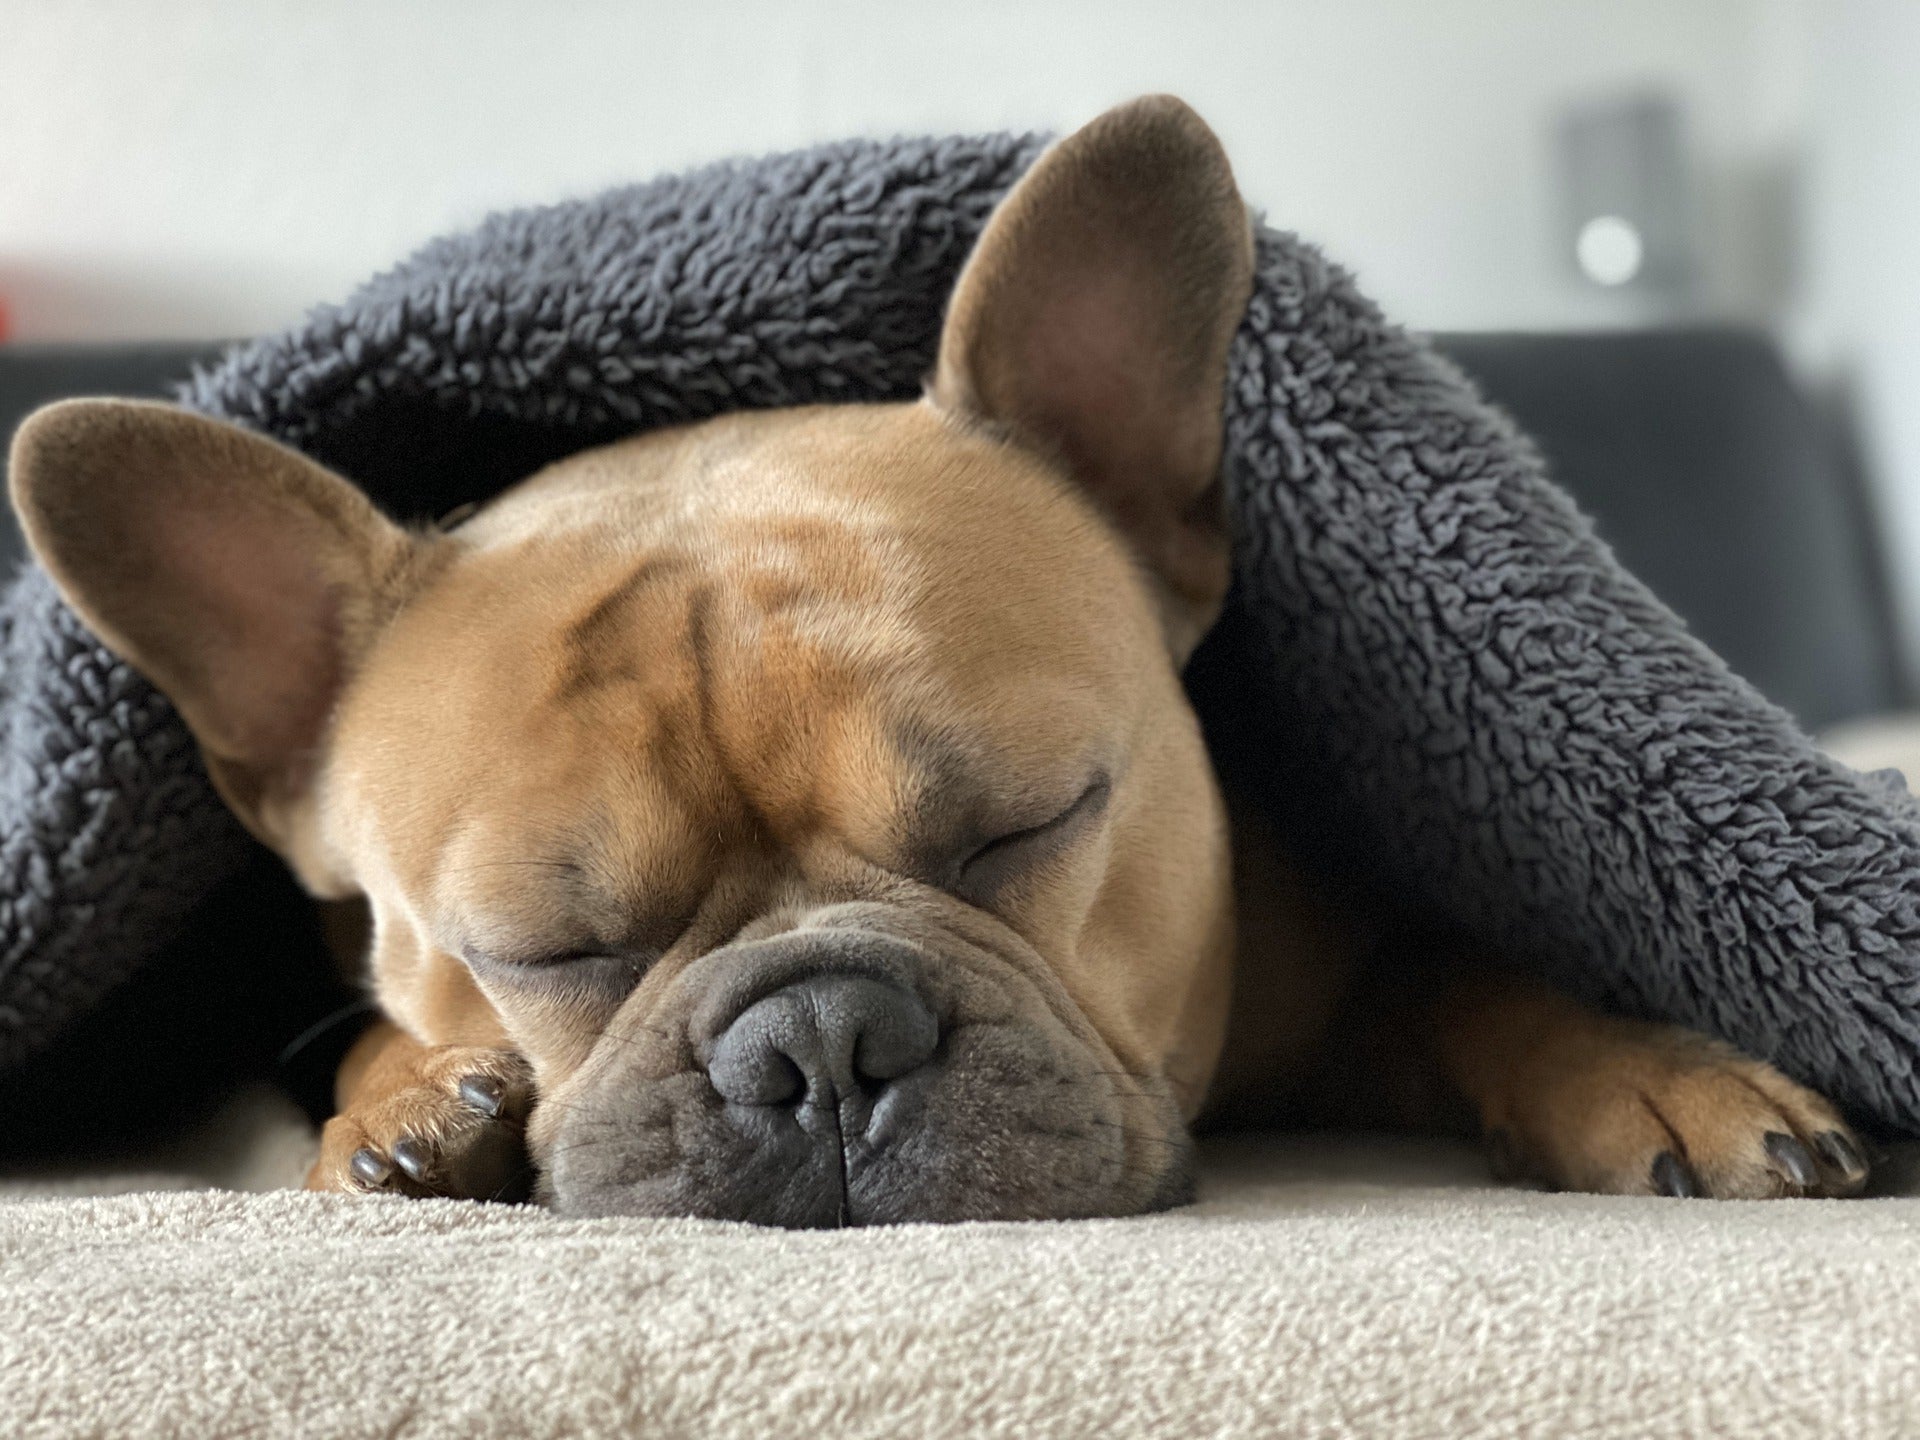 Pup resting inside a blanket